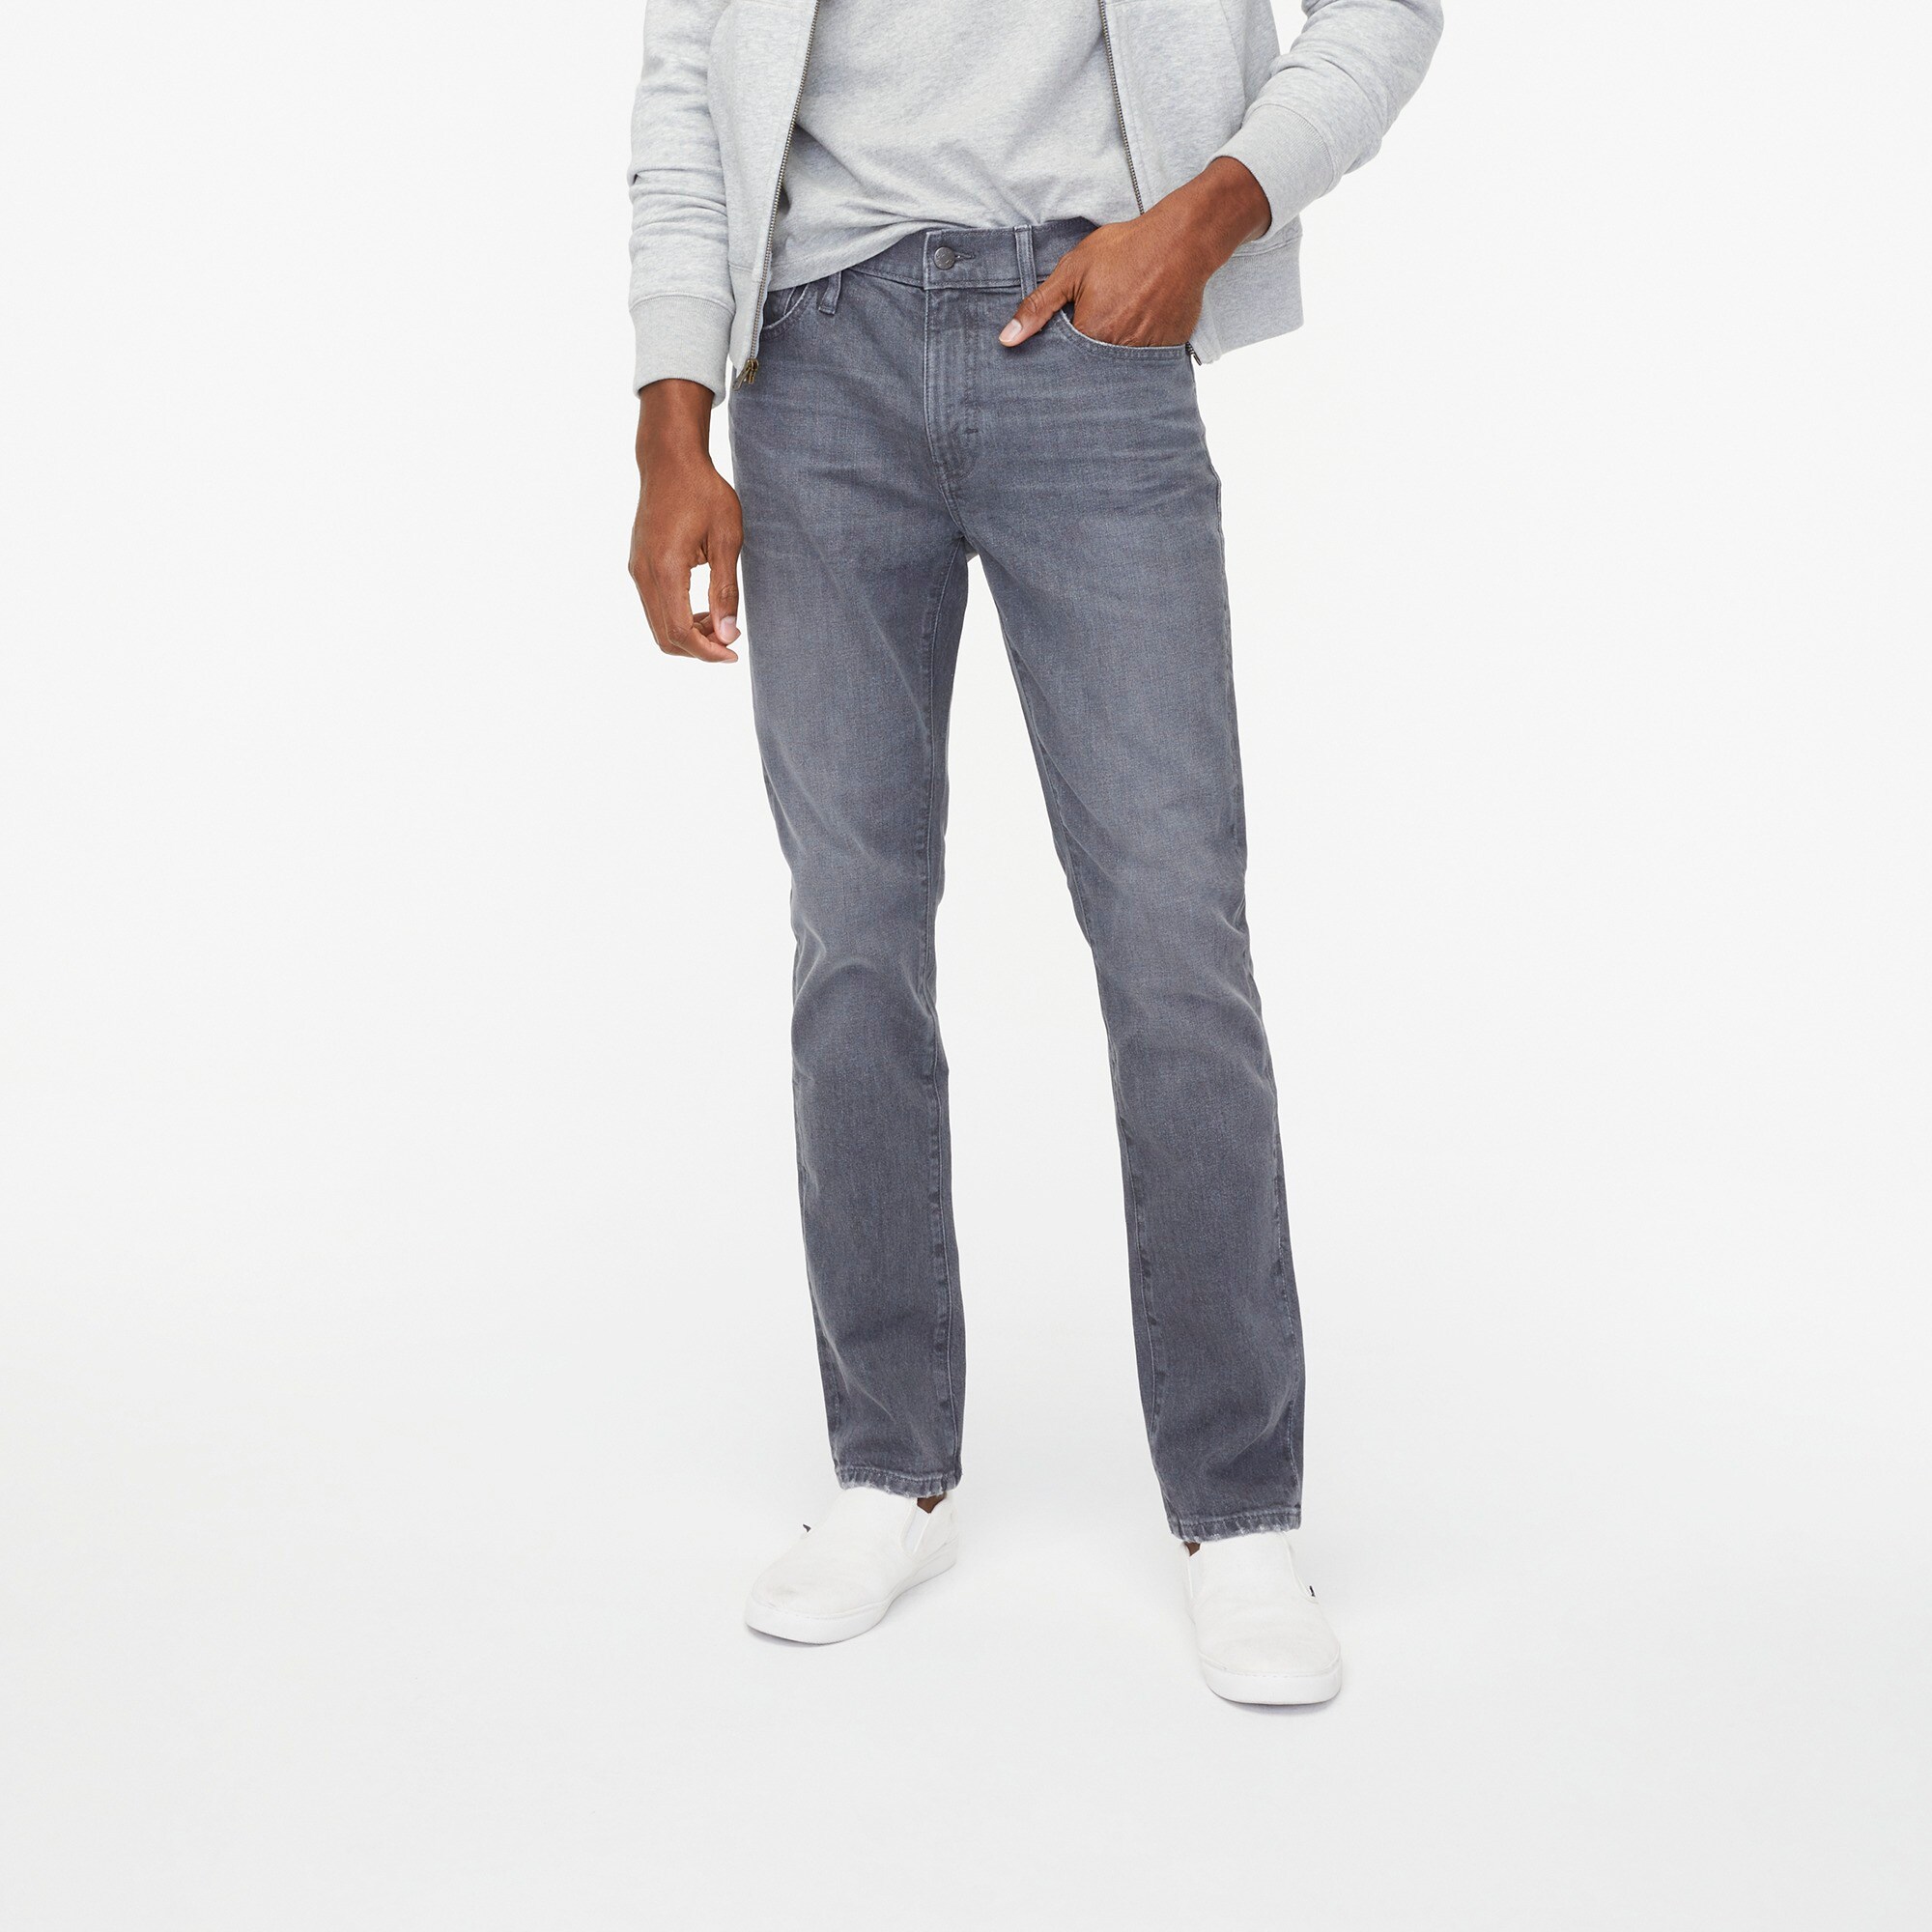  Slim-fit grey jean in signature flex